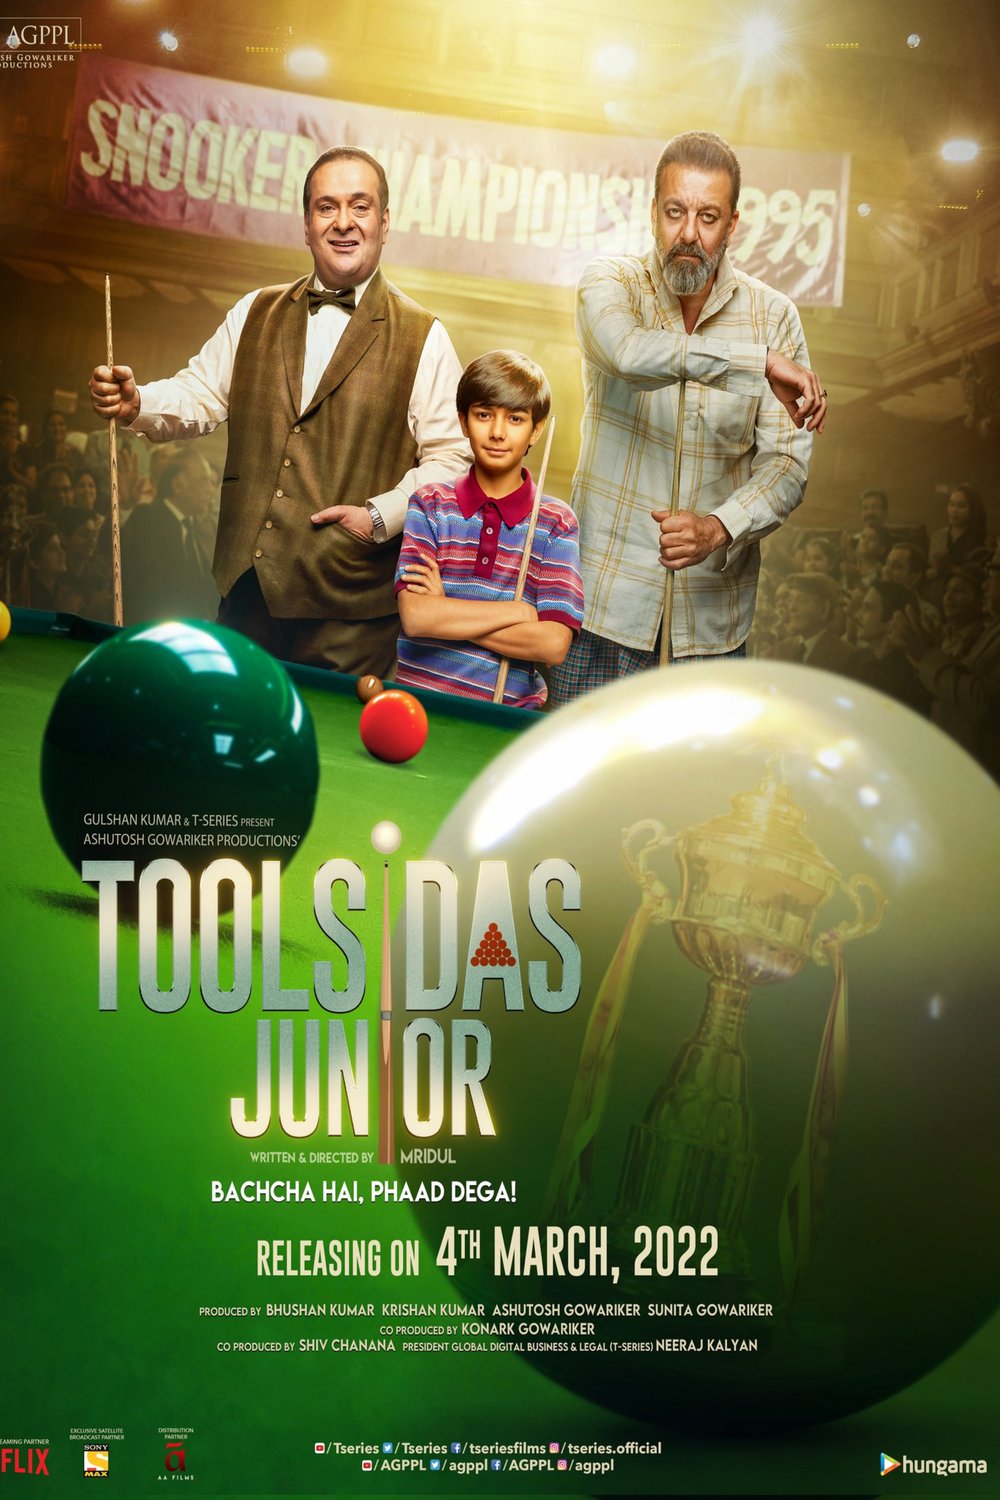 Hindi poster of the movie Toolsidas Junior